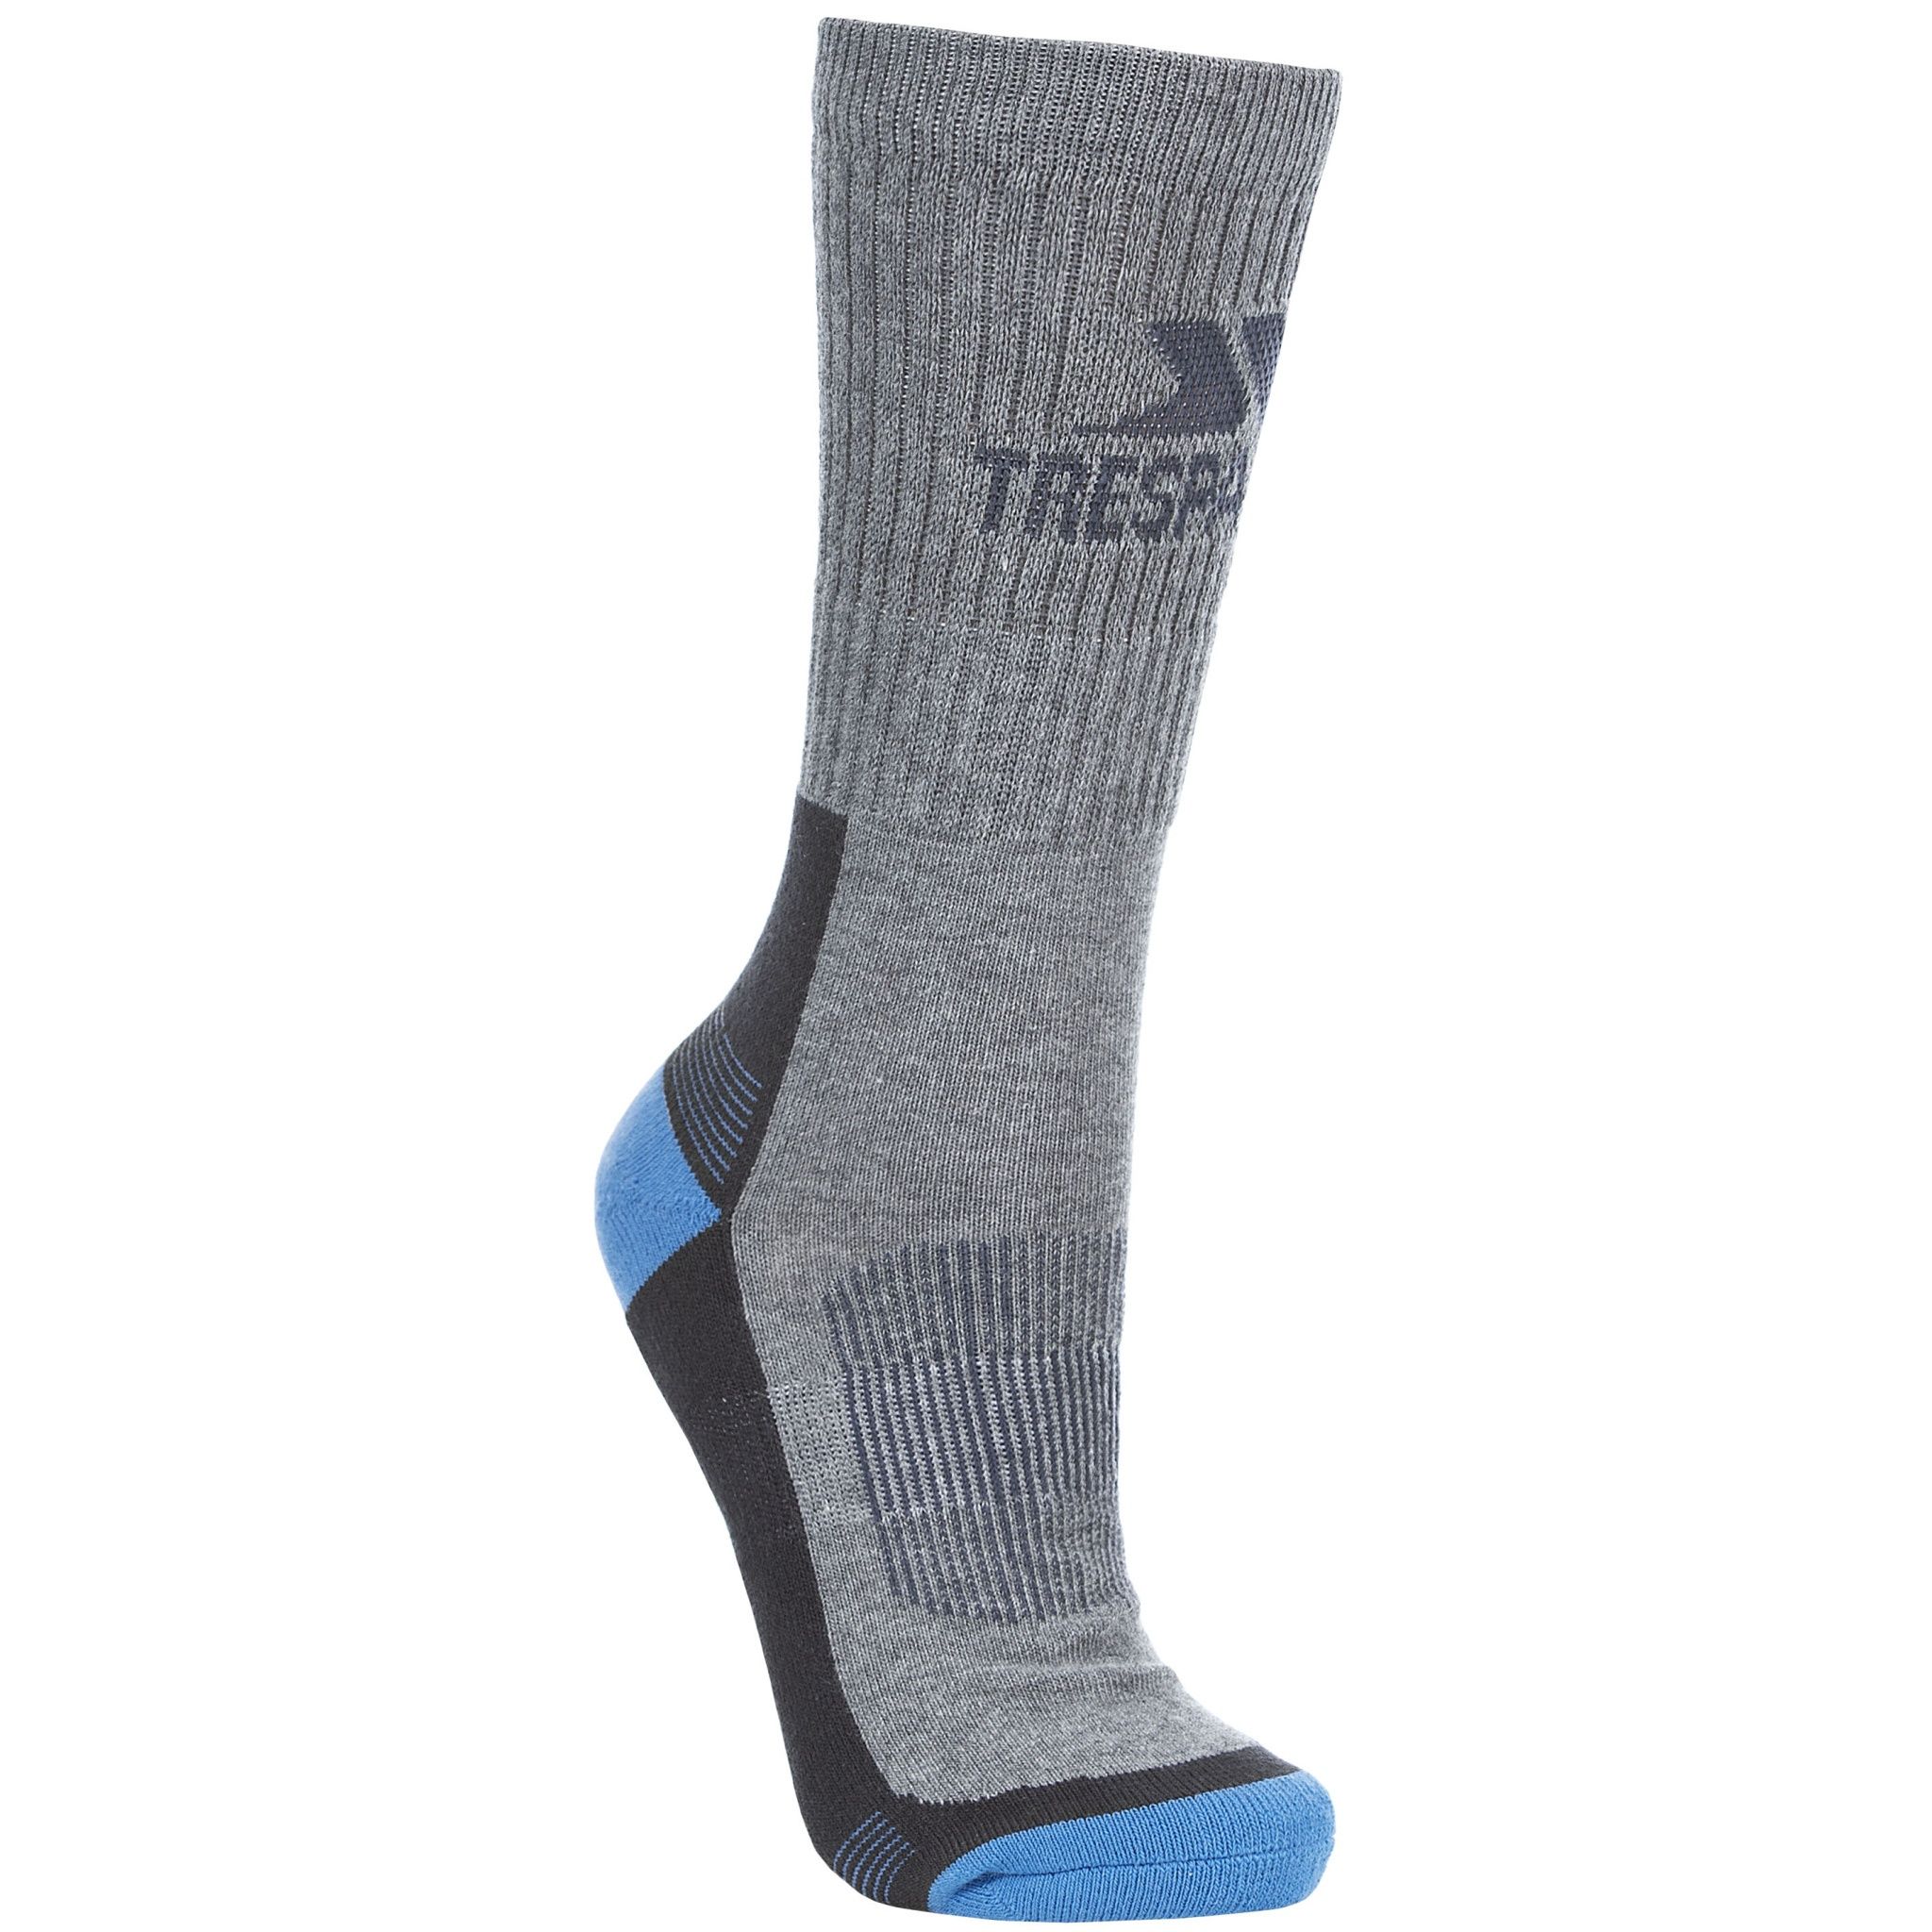 Mens padded hiking boot socks. High density padding around heel and toe. Elasticated grip elements. Elasticated cuffs. Choice of 2 colour packs. Choice of 2 sizes: UK 4-7, UK 7-11. 70% Cotton, 20% Nylon, 10% Elastane.